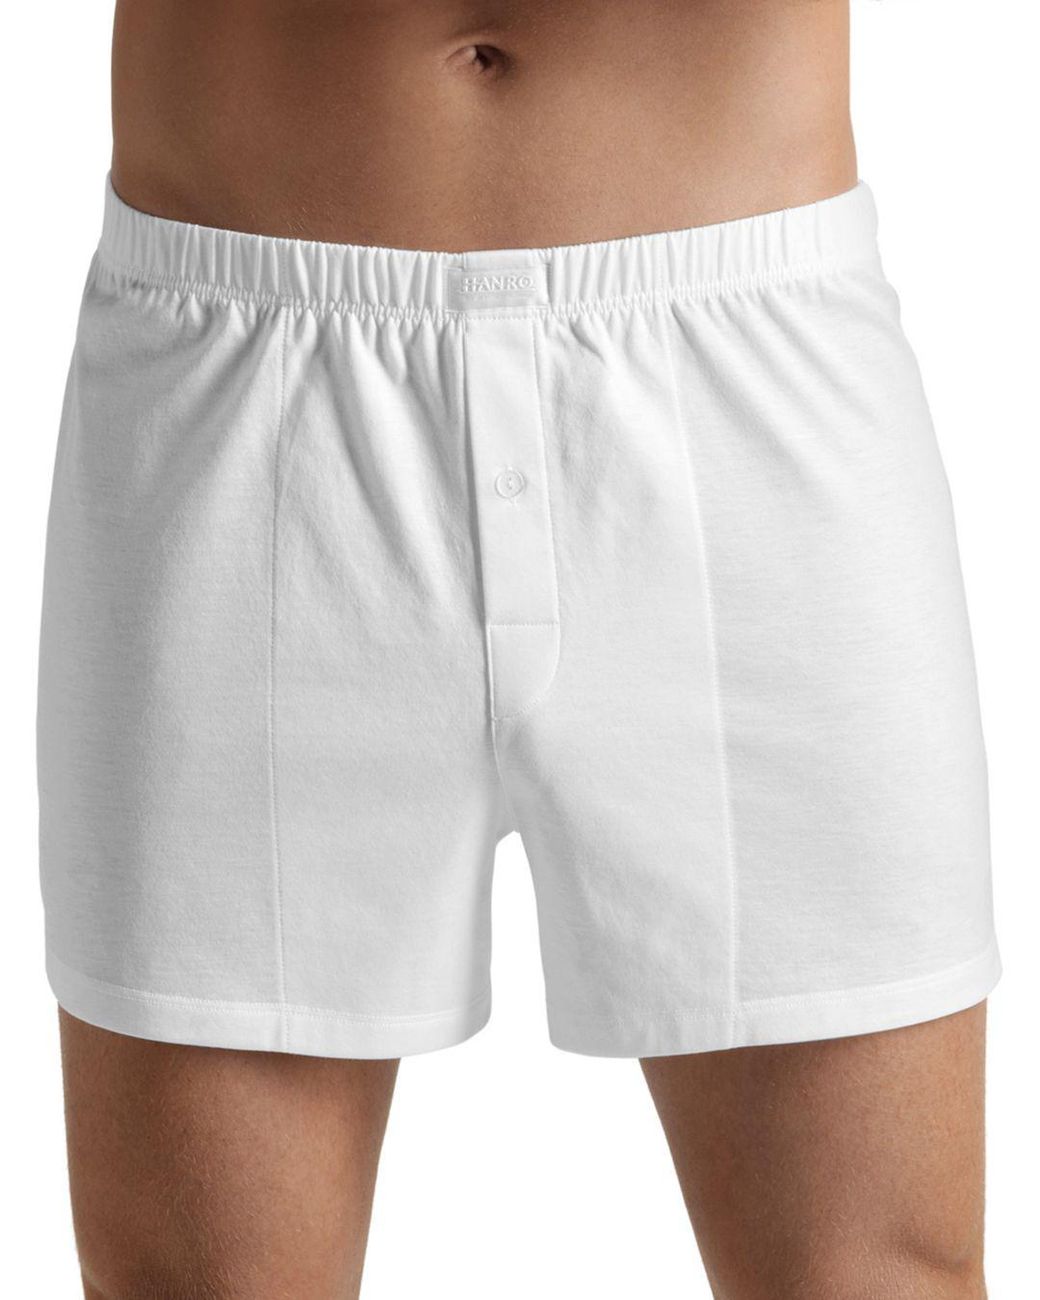 Hanro Men's Sporty Cotton Boxer Shorts Briefs Mercerised Cotton New Size XL  Herren CO6833910